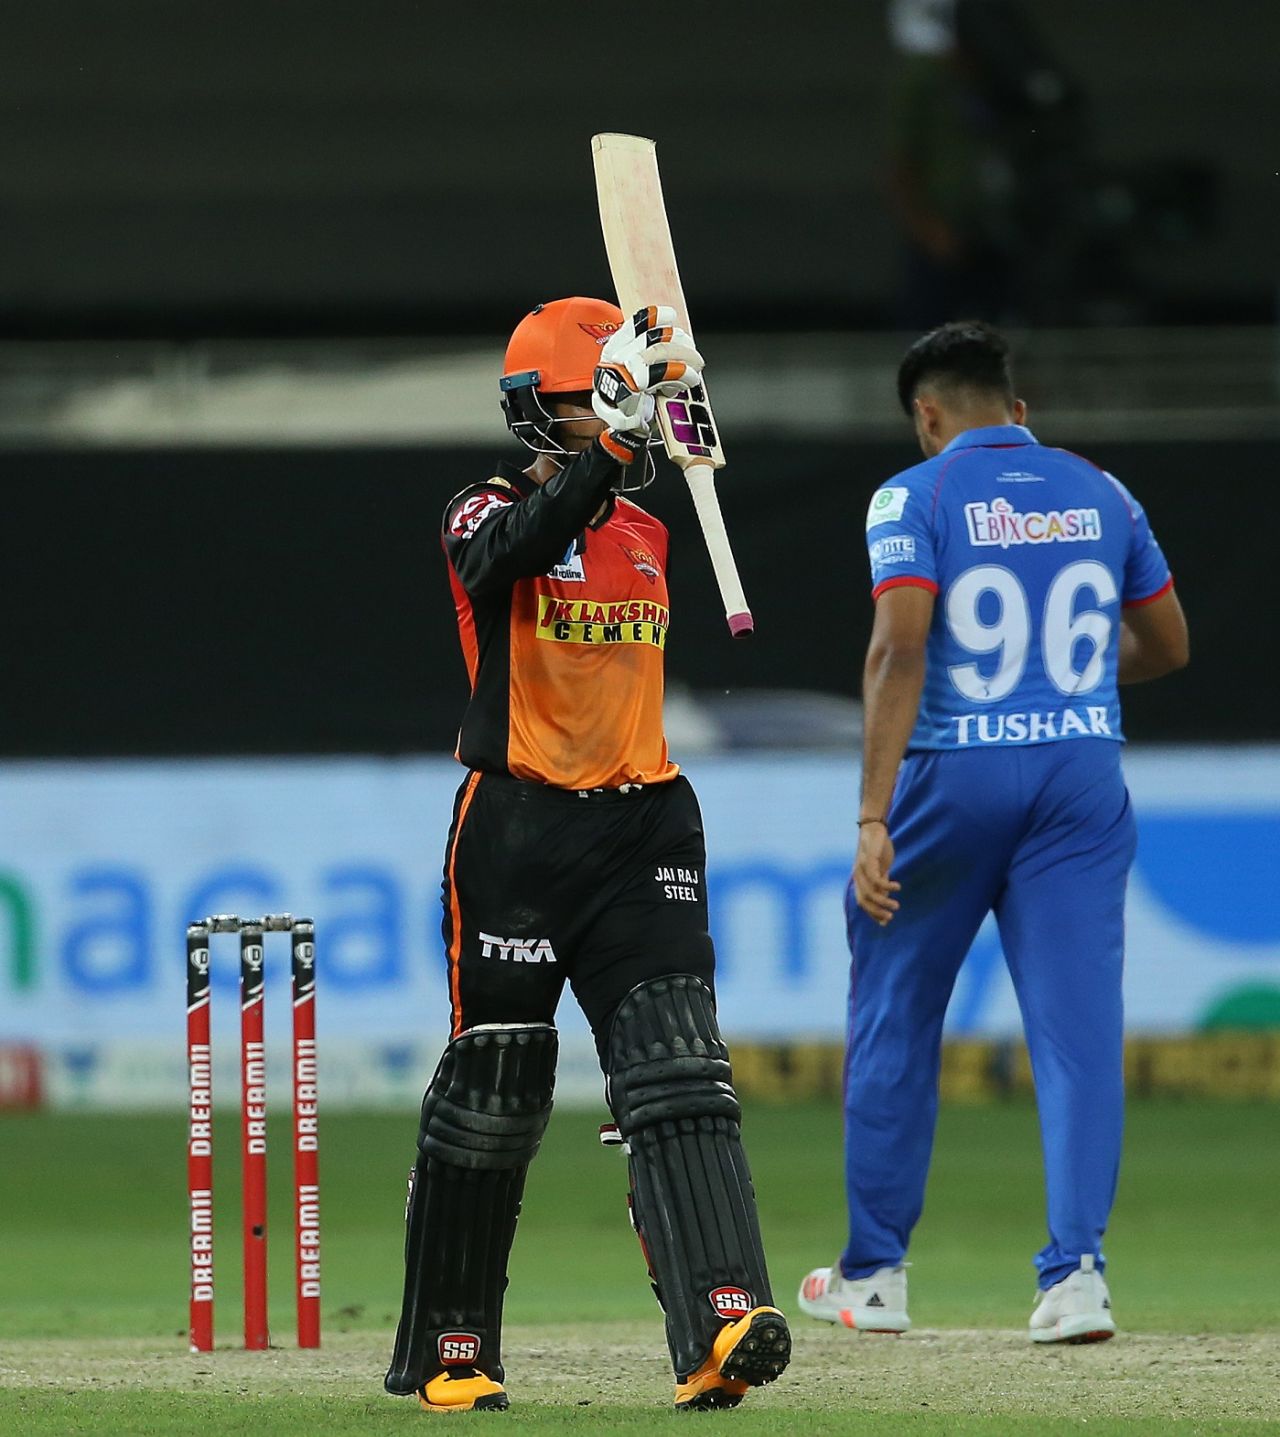 Wriddhiman Saha hit a 27-ball half-century, Sunrisers Hyderabad vs Delhi Capitals, IPL 2020, Dubai, October 27, 2020